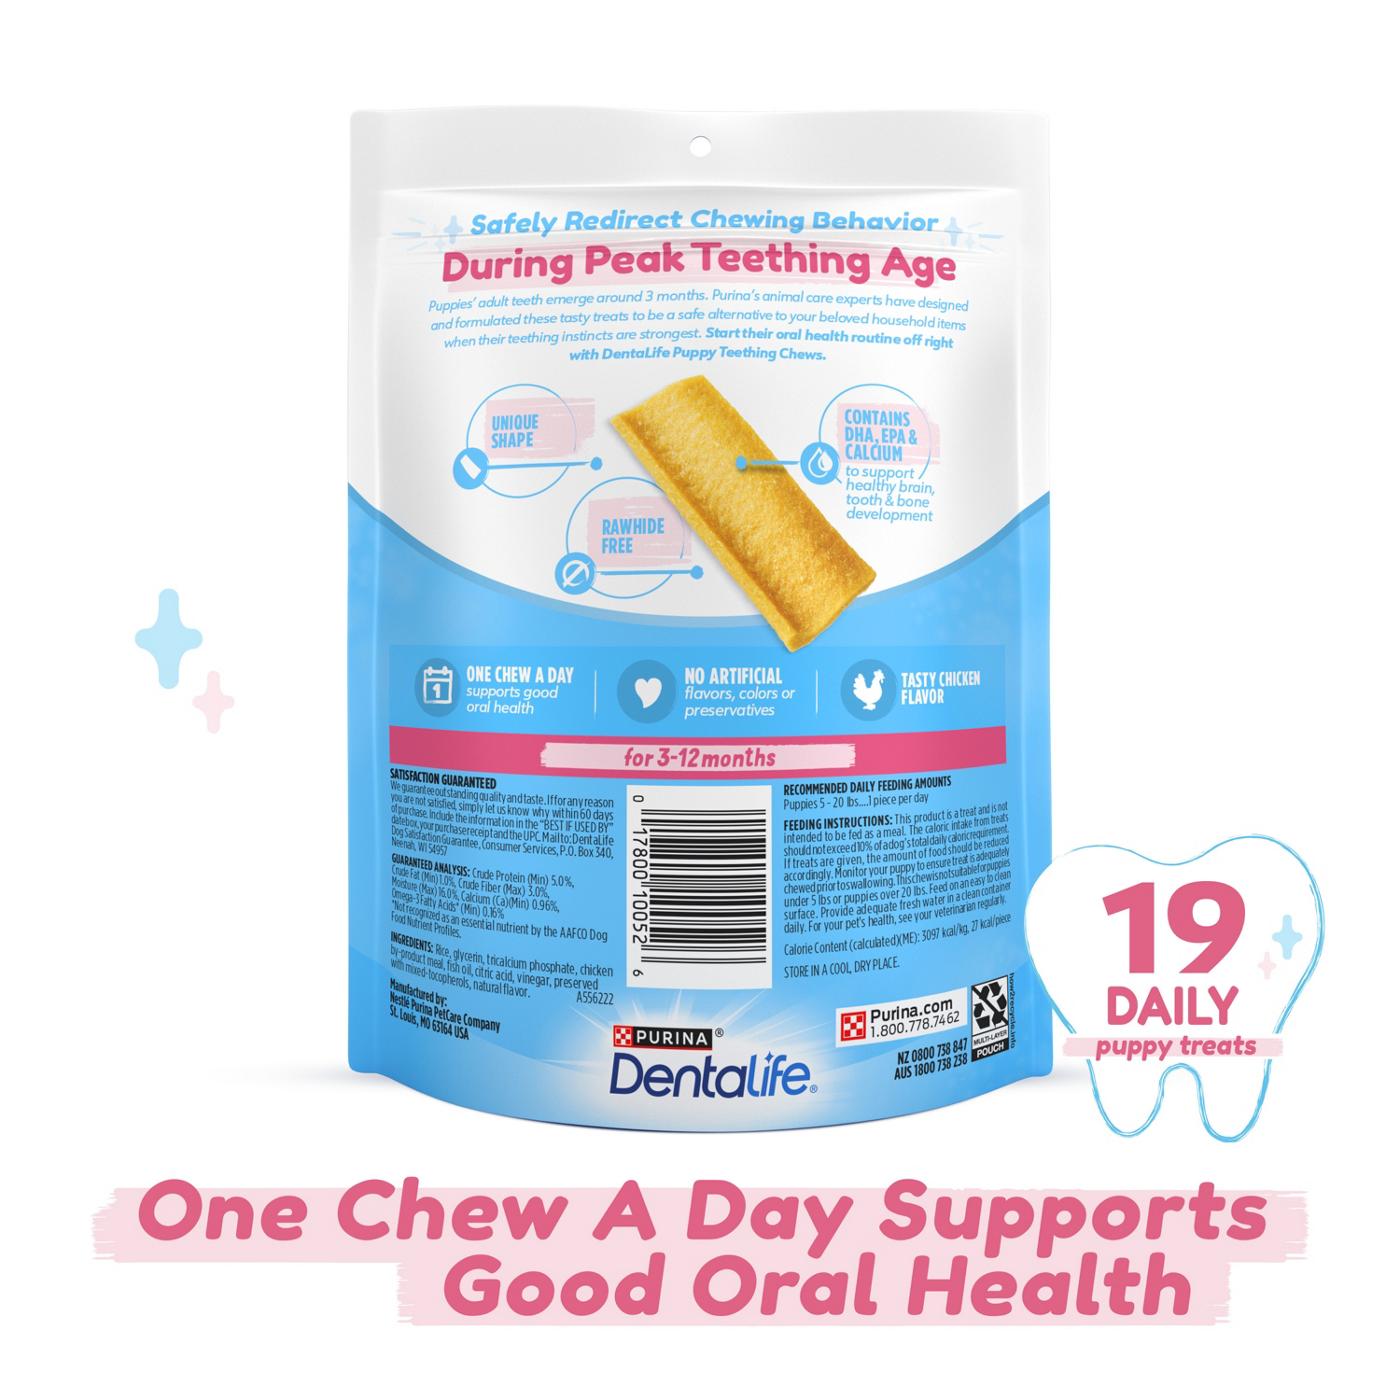 DentaLife Puppy Teething Chews; image 7 of 8